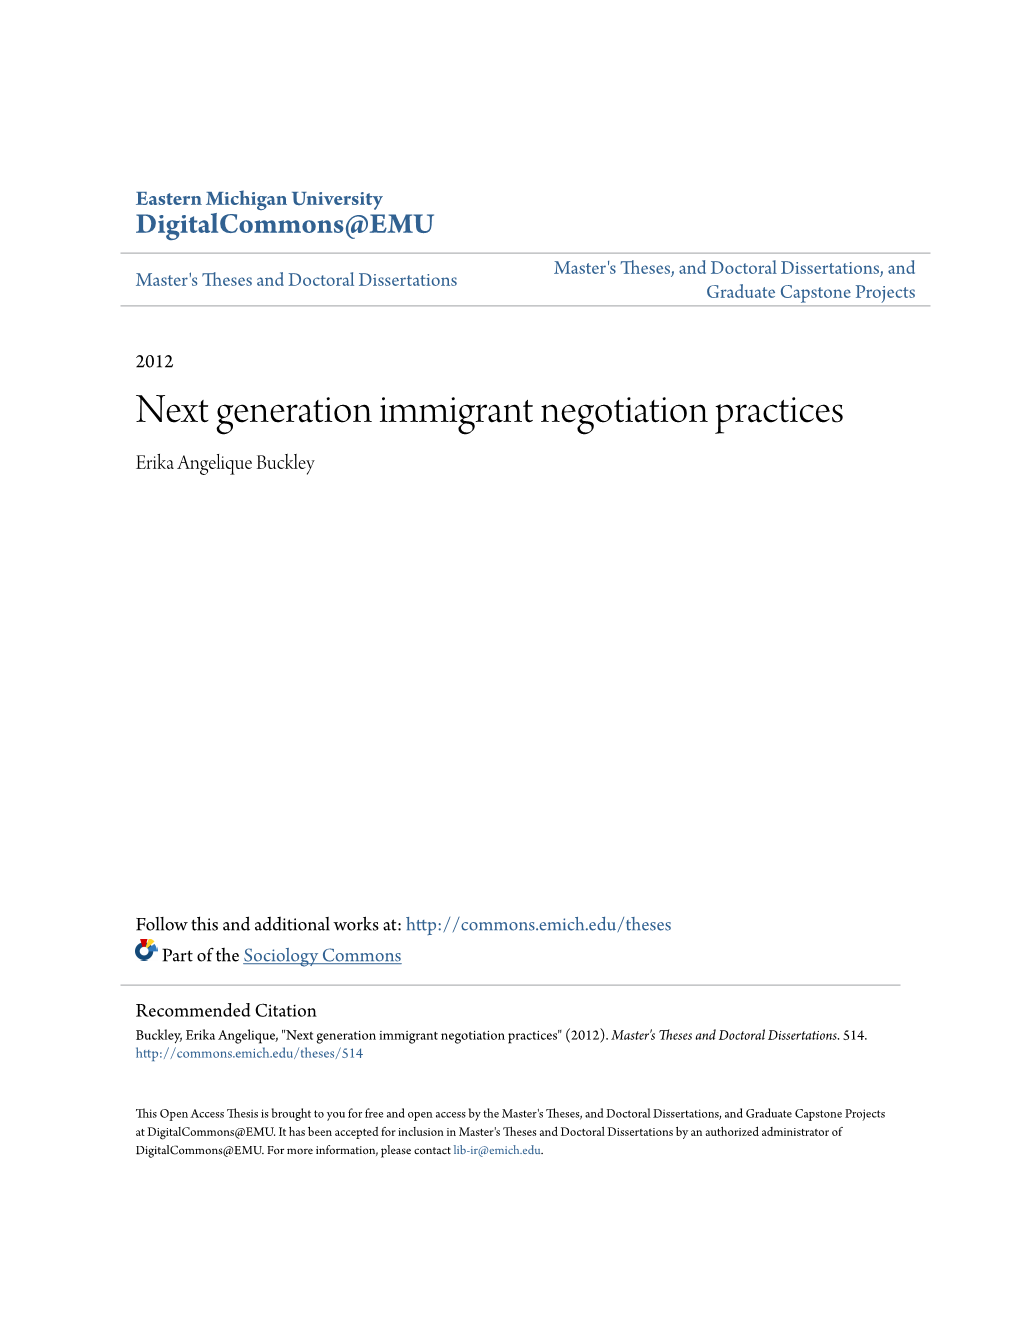 Next Generation Immigrant Negotiation Practices Erika Angelique Buckley